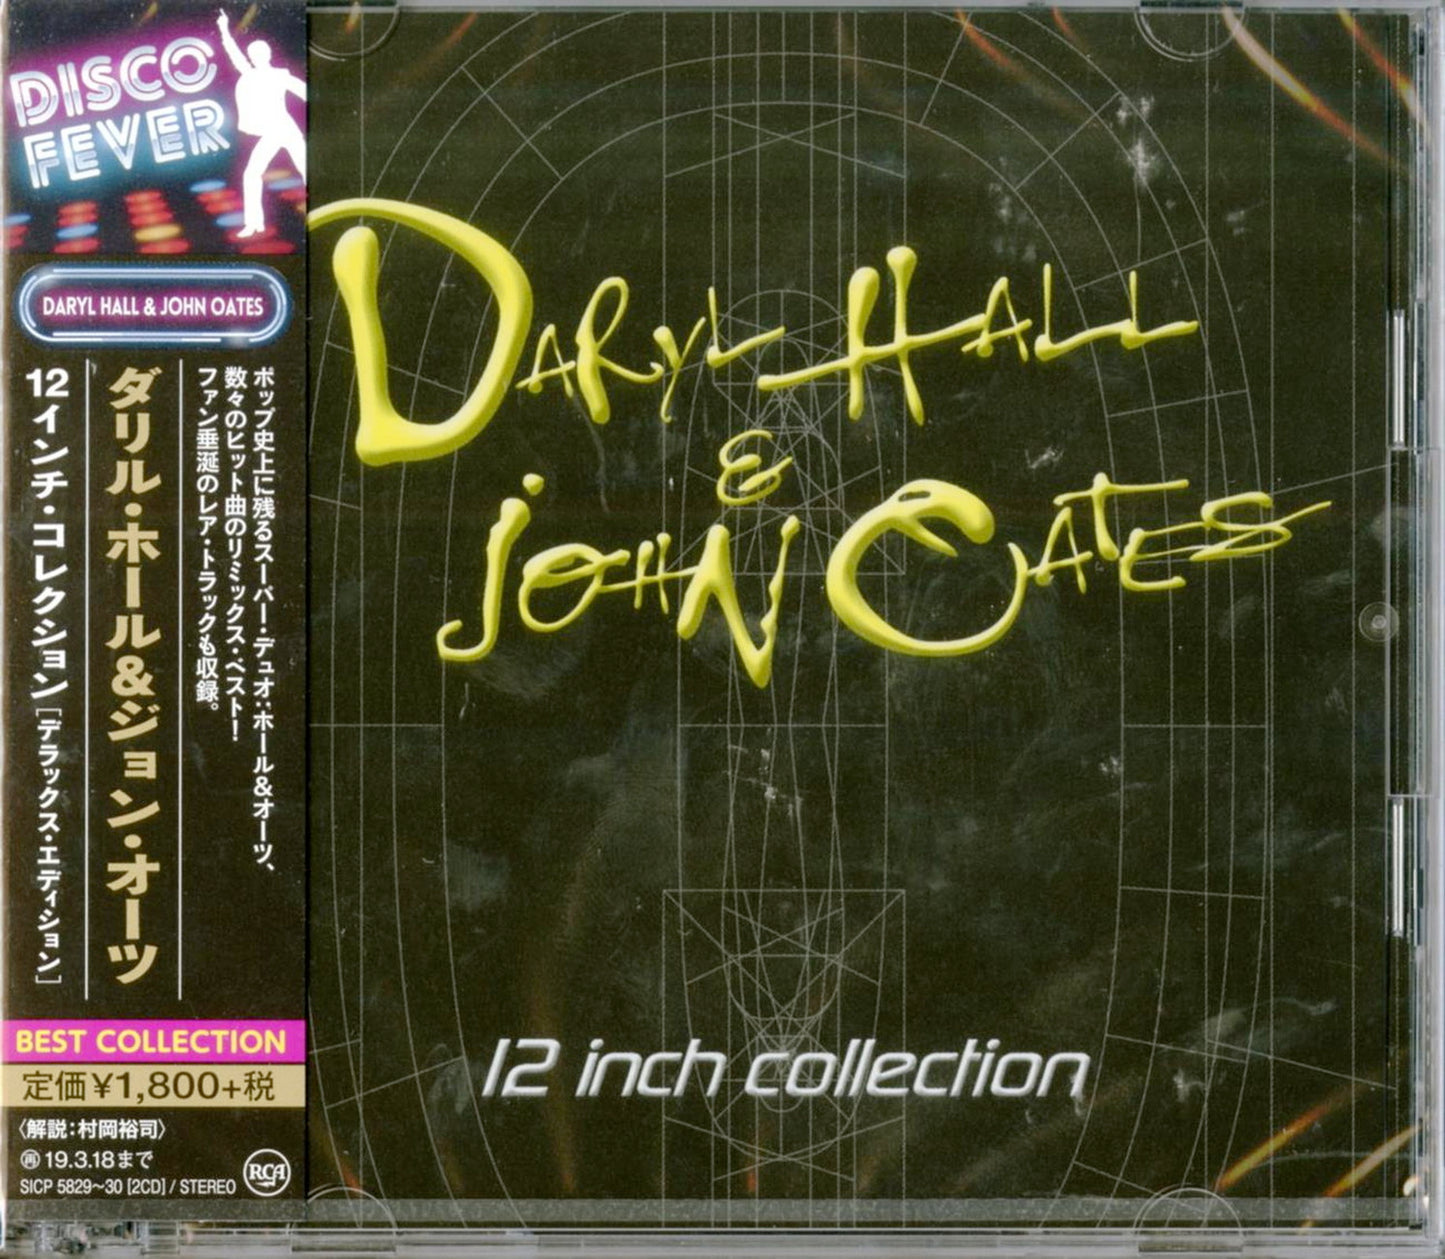 Daryl Hall & John Oates - 12Inch Collection - Japan  2 CD